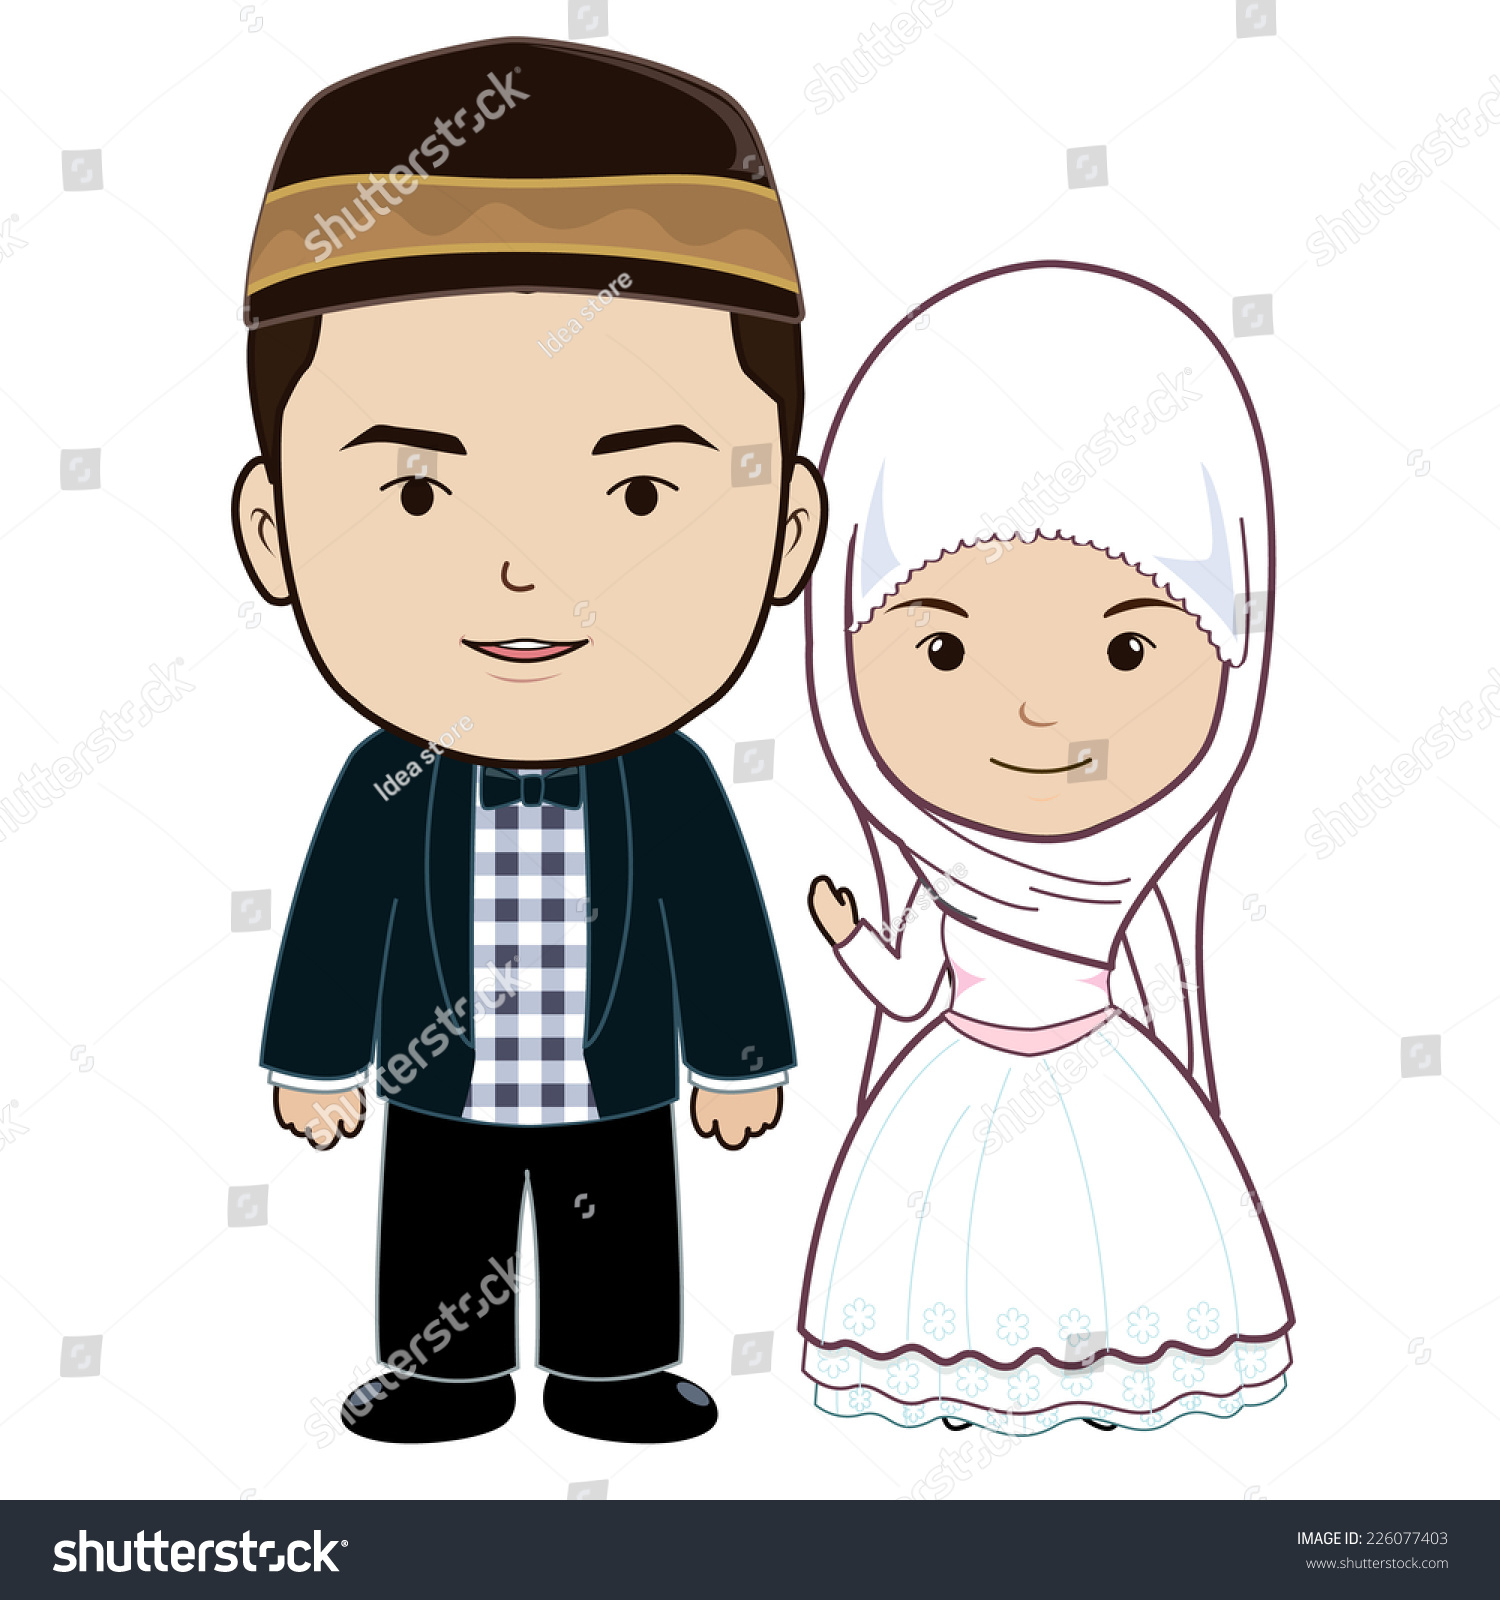 muslim wedding clipart free - photo #2